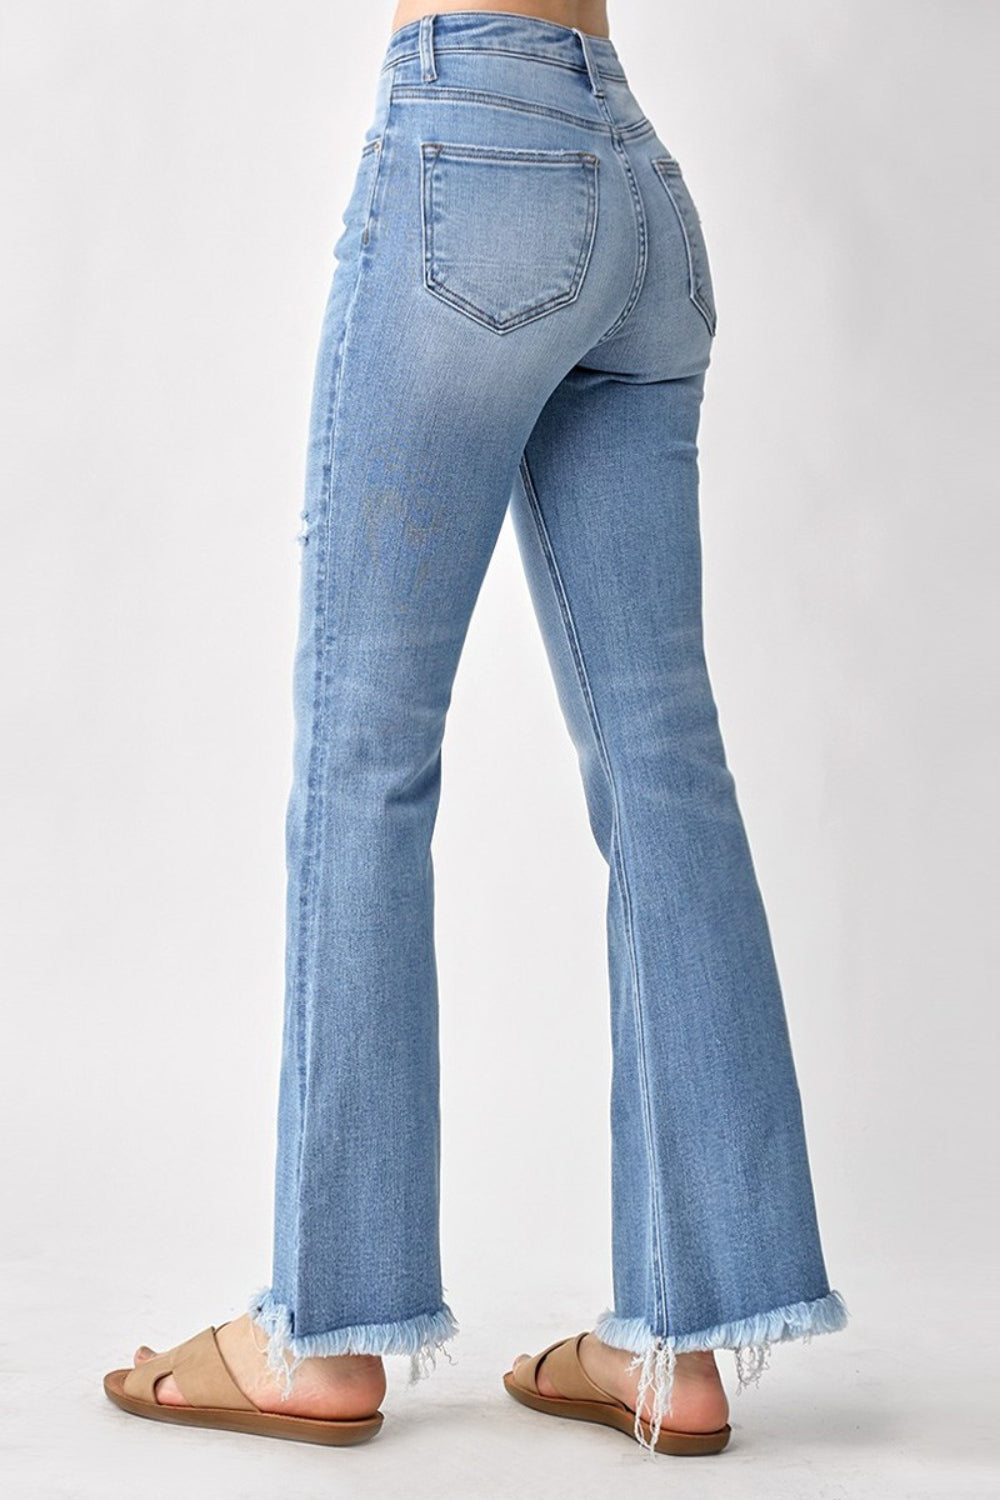 RISEN High Rise Frayed Hem Bootcut Jeans